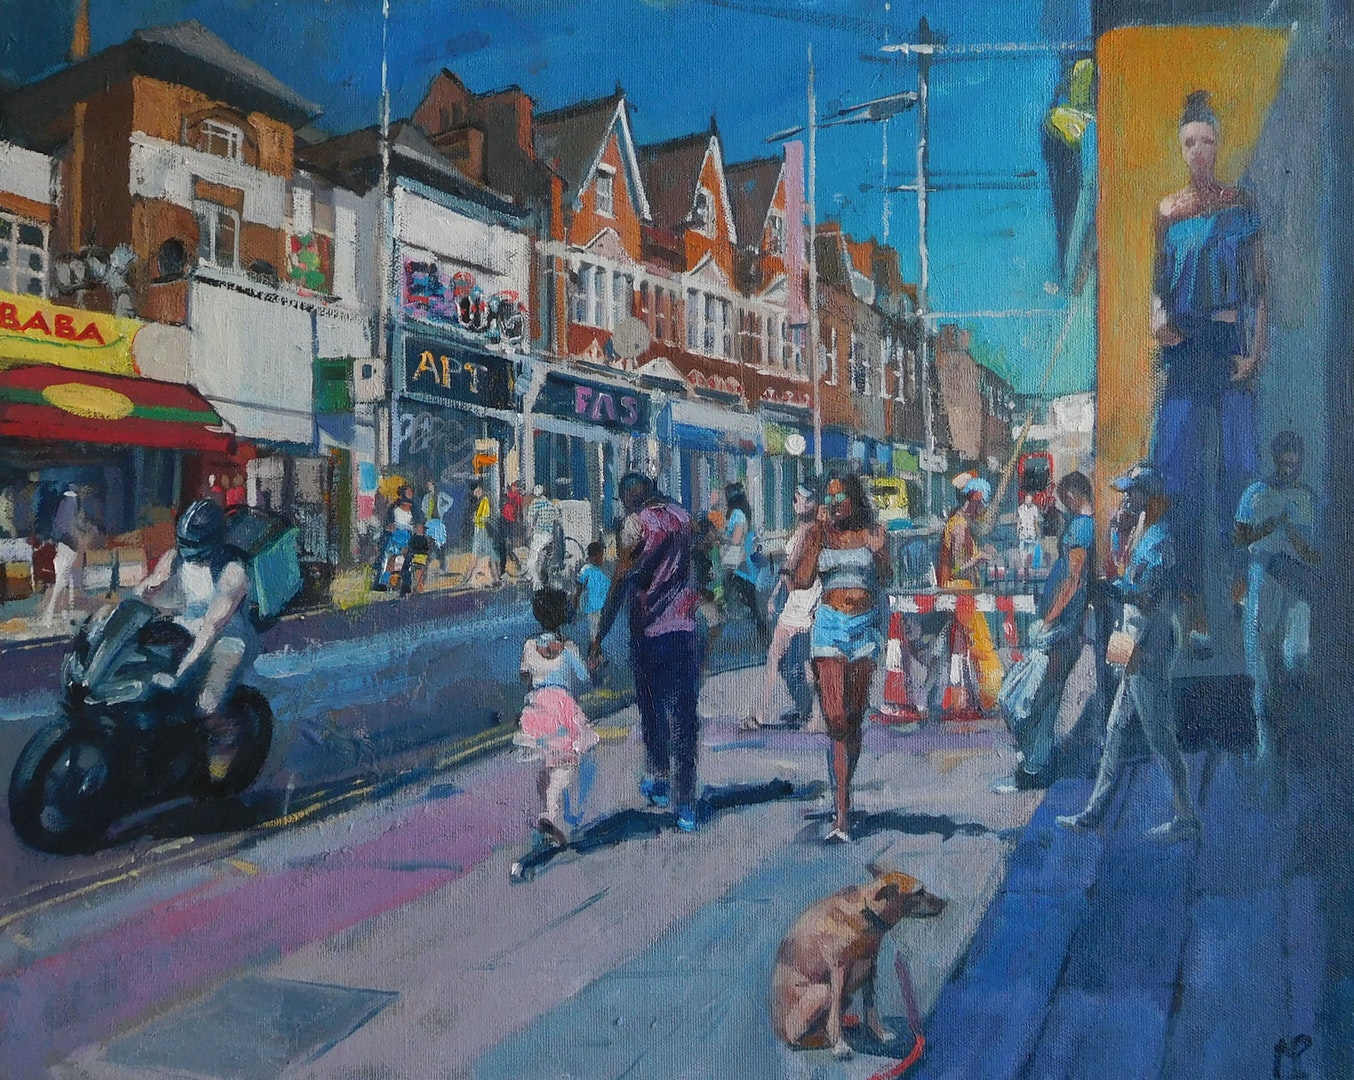 'Waiting Dog Primark', Mark Pearson, Oil on canvas, 44 x 54 cm